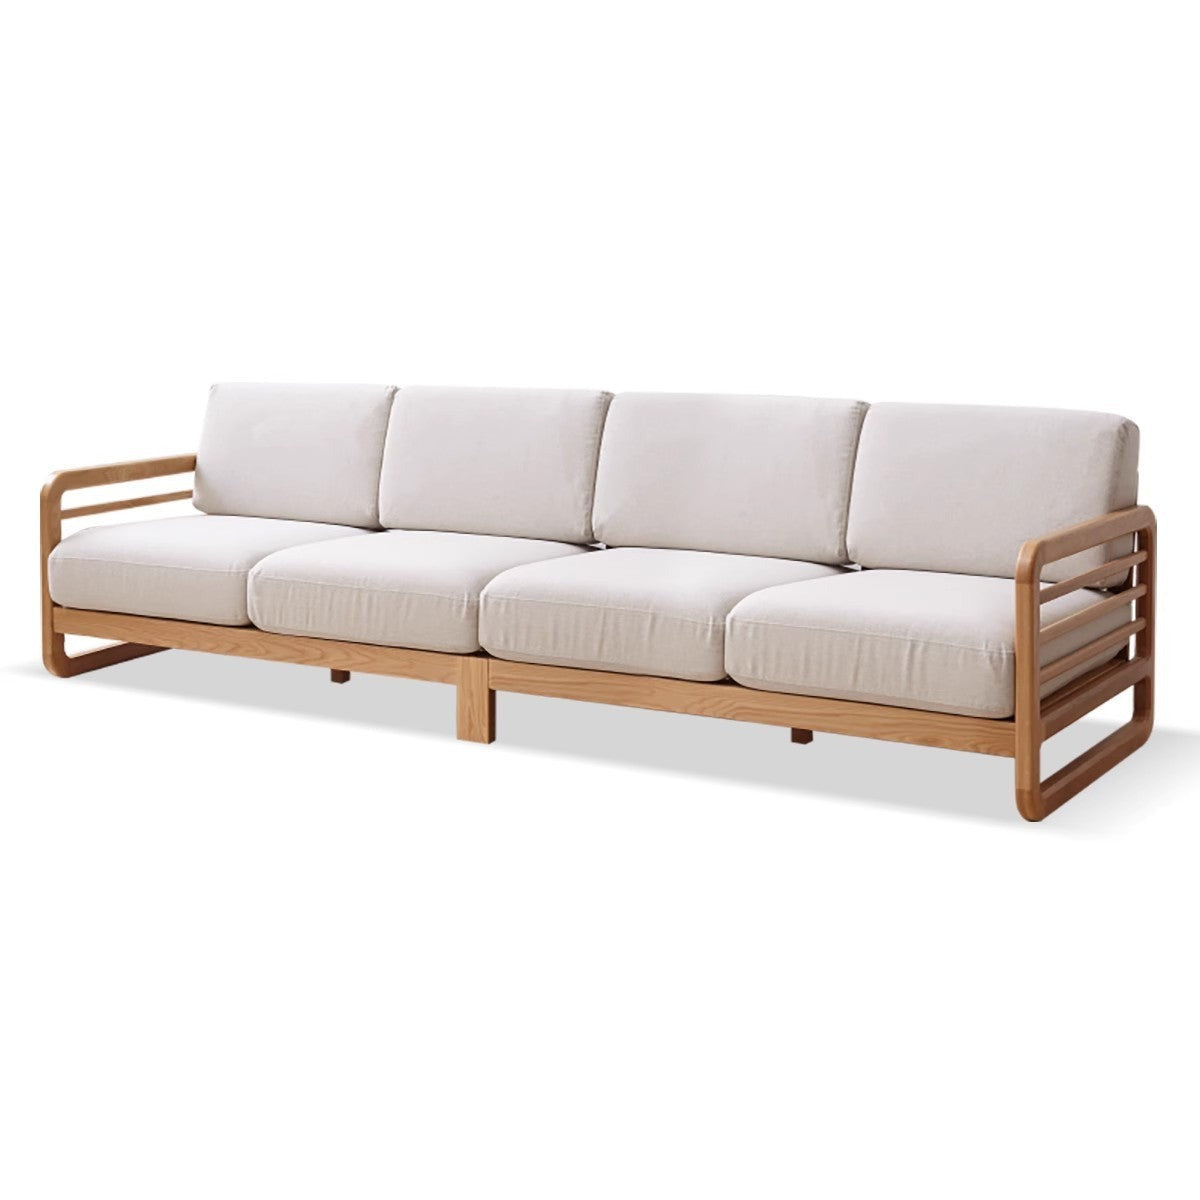 Oak solid wood Modern and Simple Fabric Sofa"